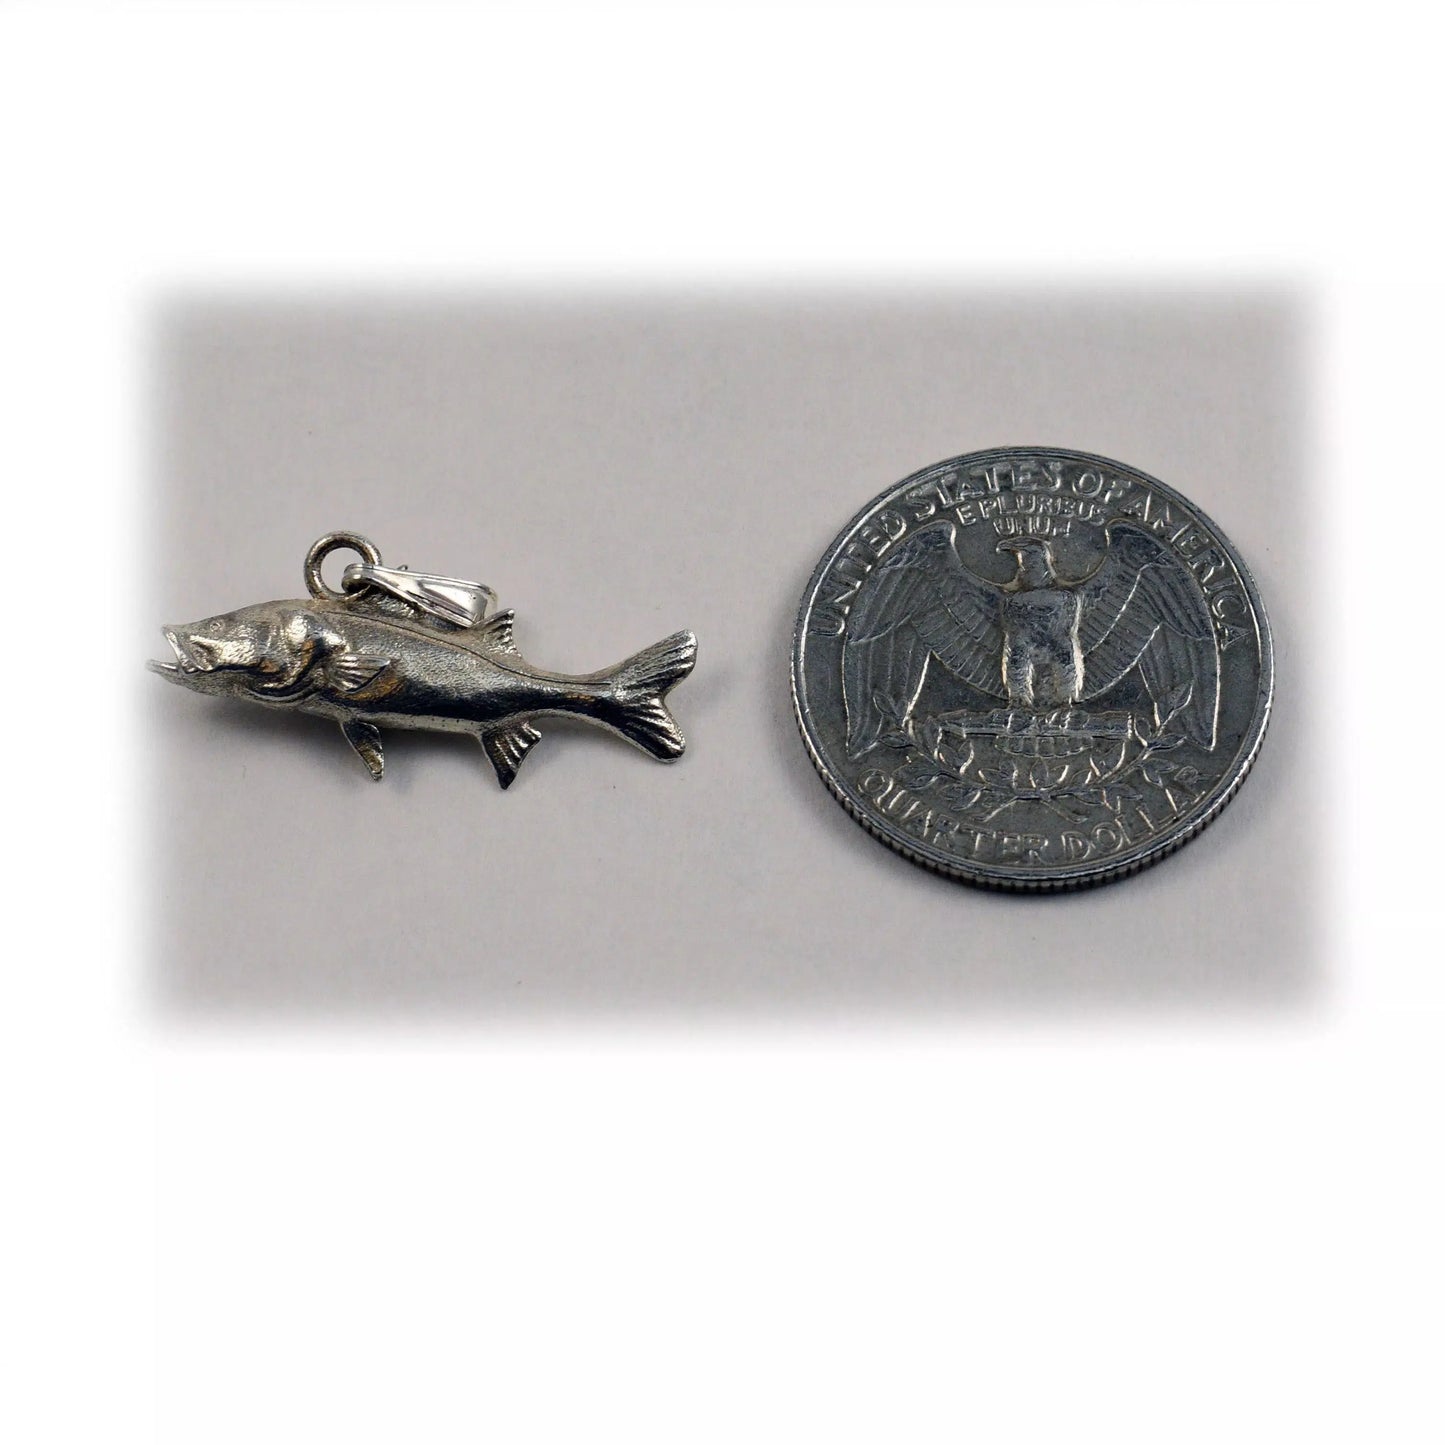 Snook Fish Pendant - Small